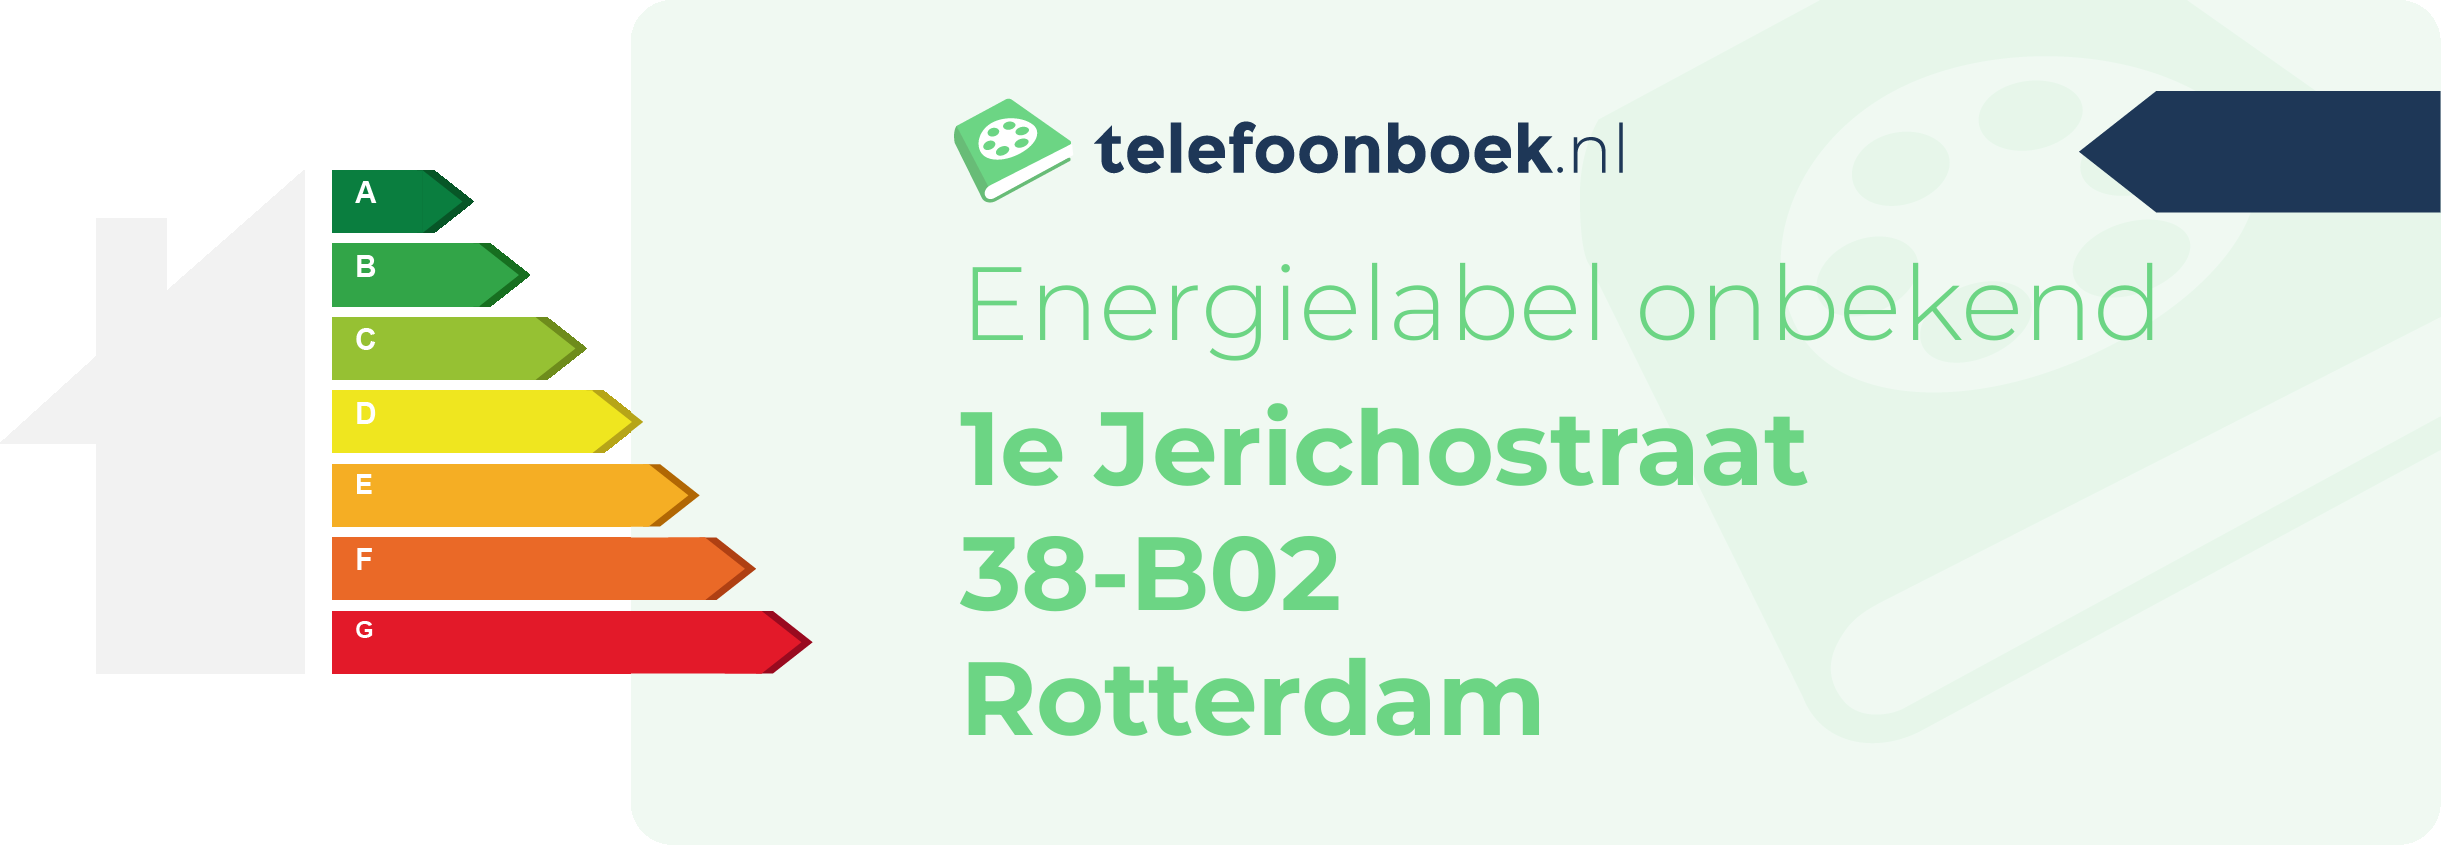 Energielabel 1e Jerichostraat 38-B02 Rotterdam